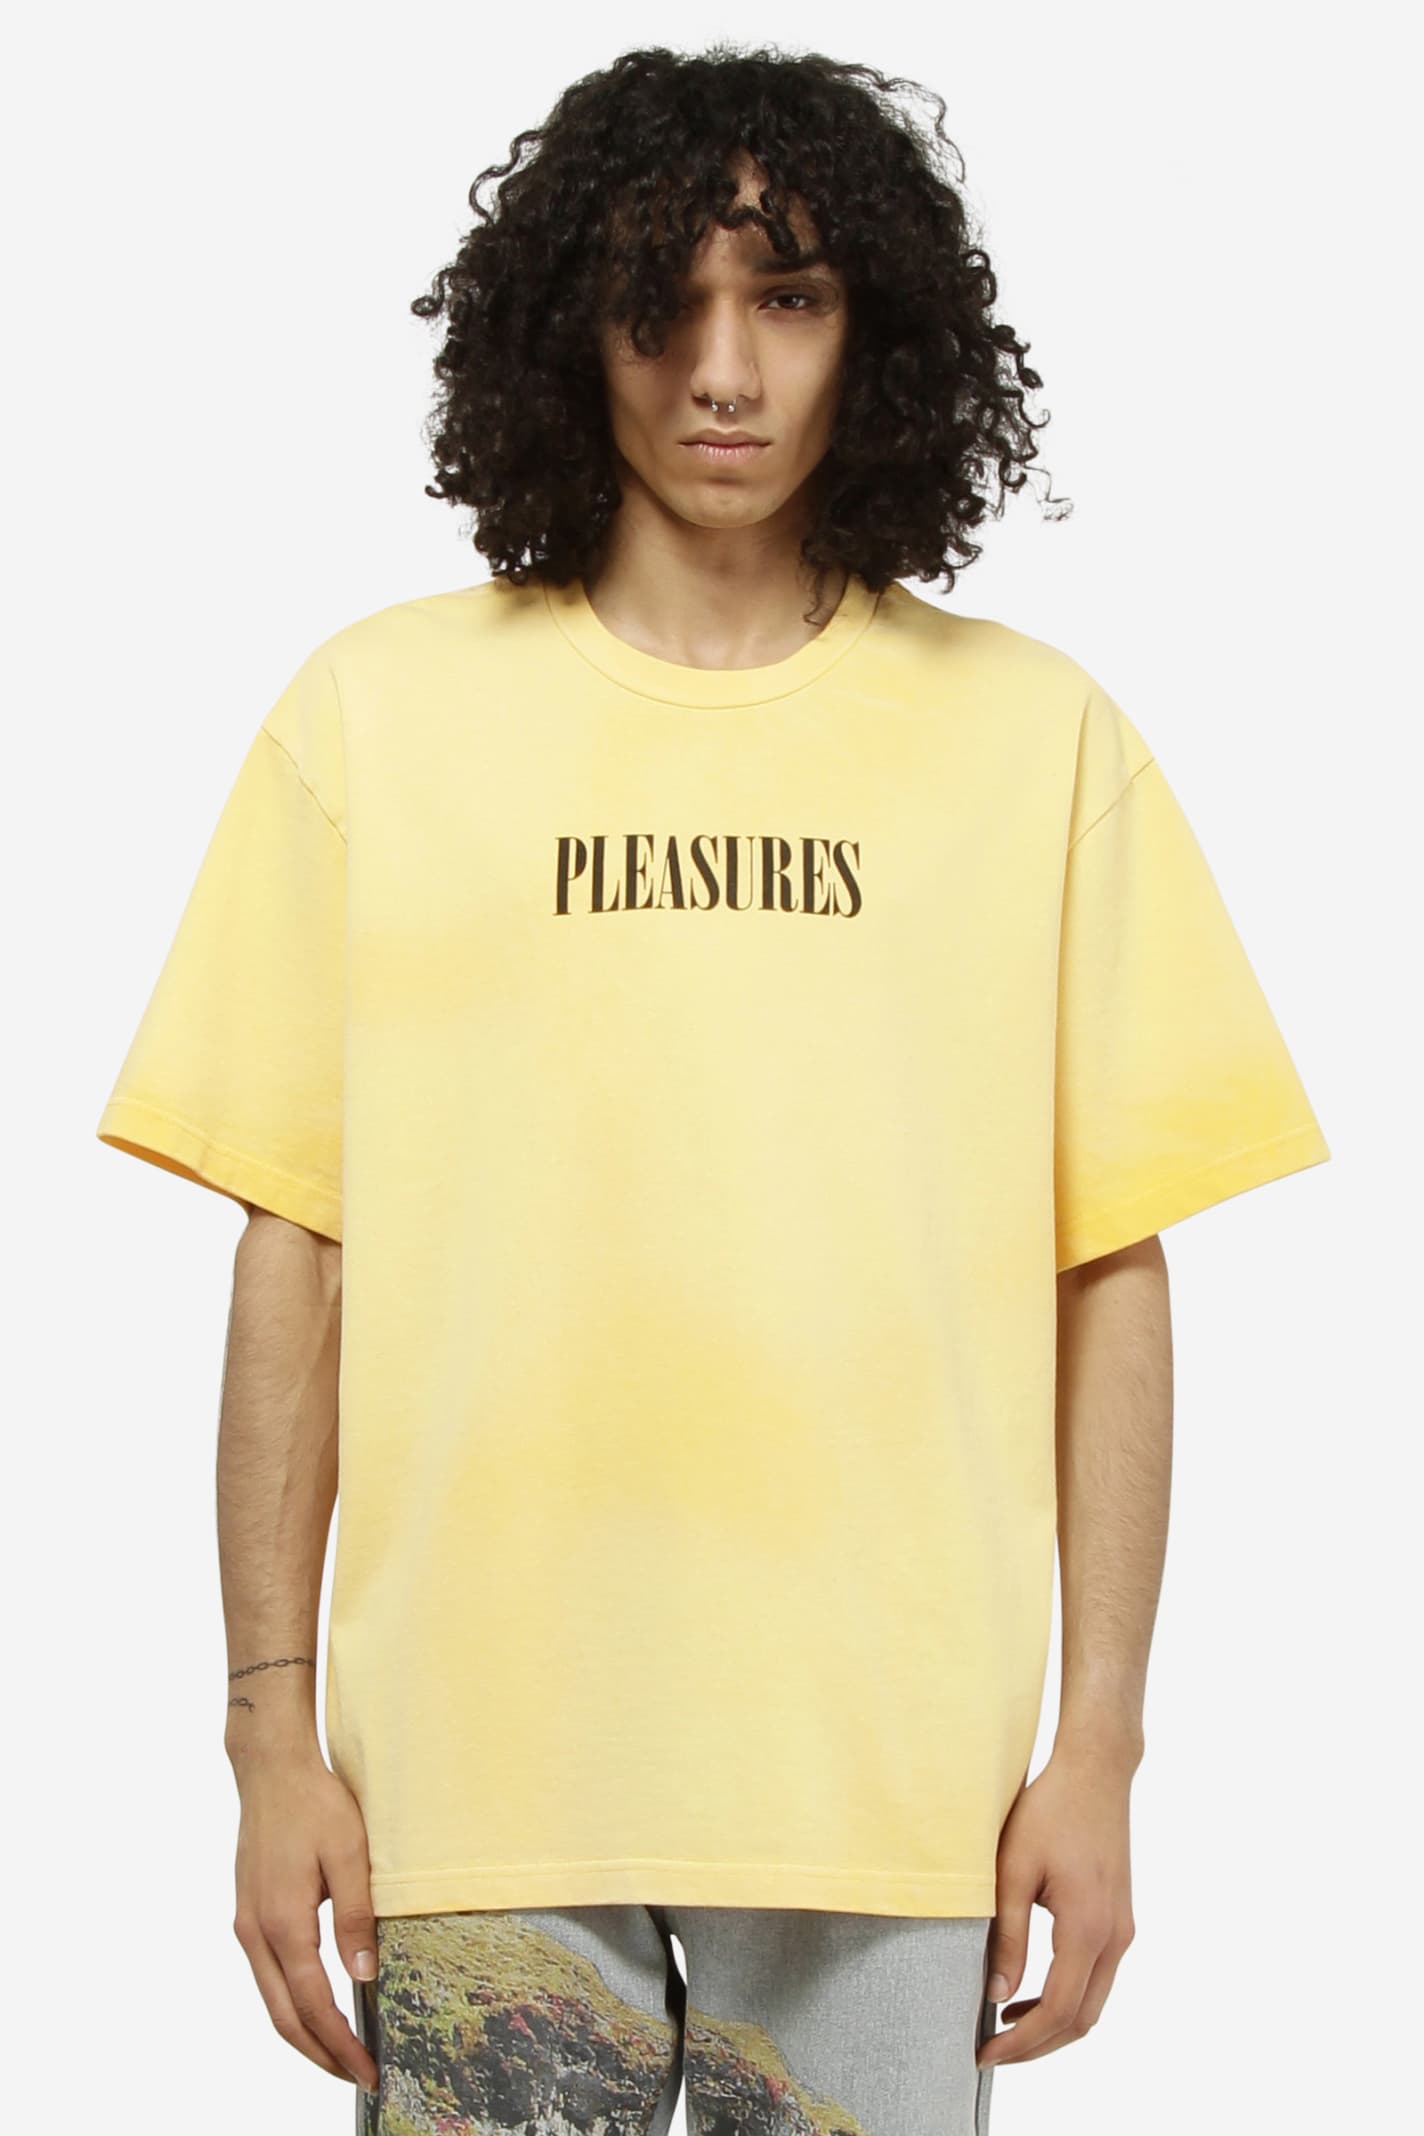 Pleasures Special T-shirt